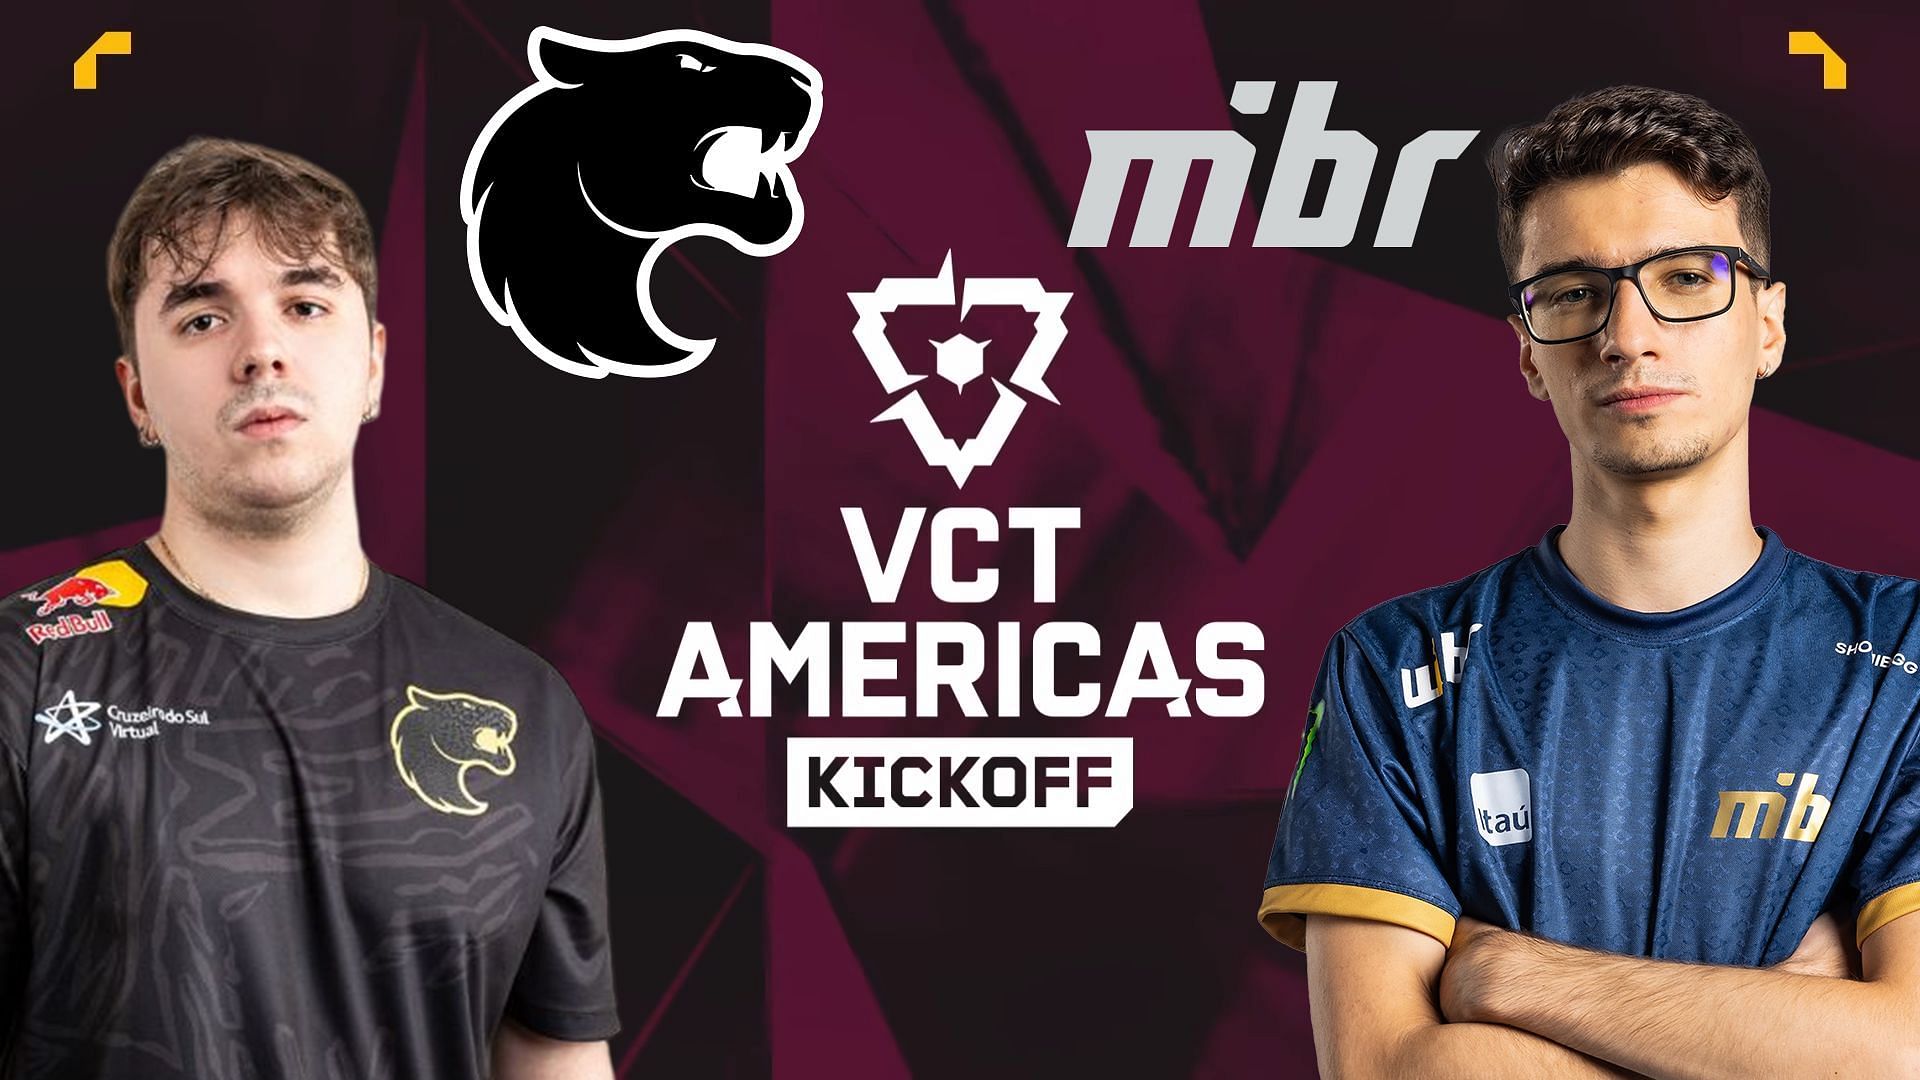 FURIA vs MIBR at VCT Americas Kickoff (Image via Riot Games, FURIA and MIBR)